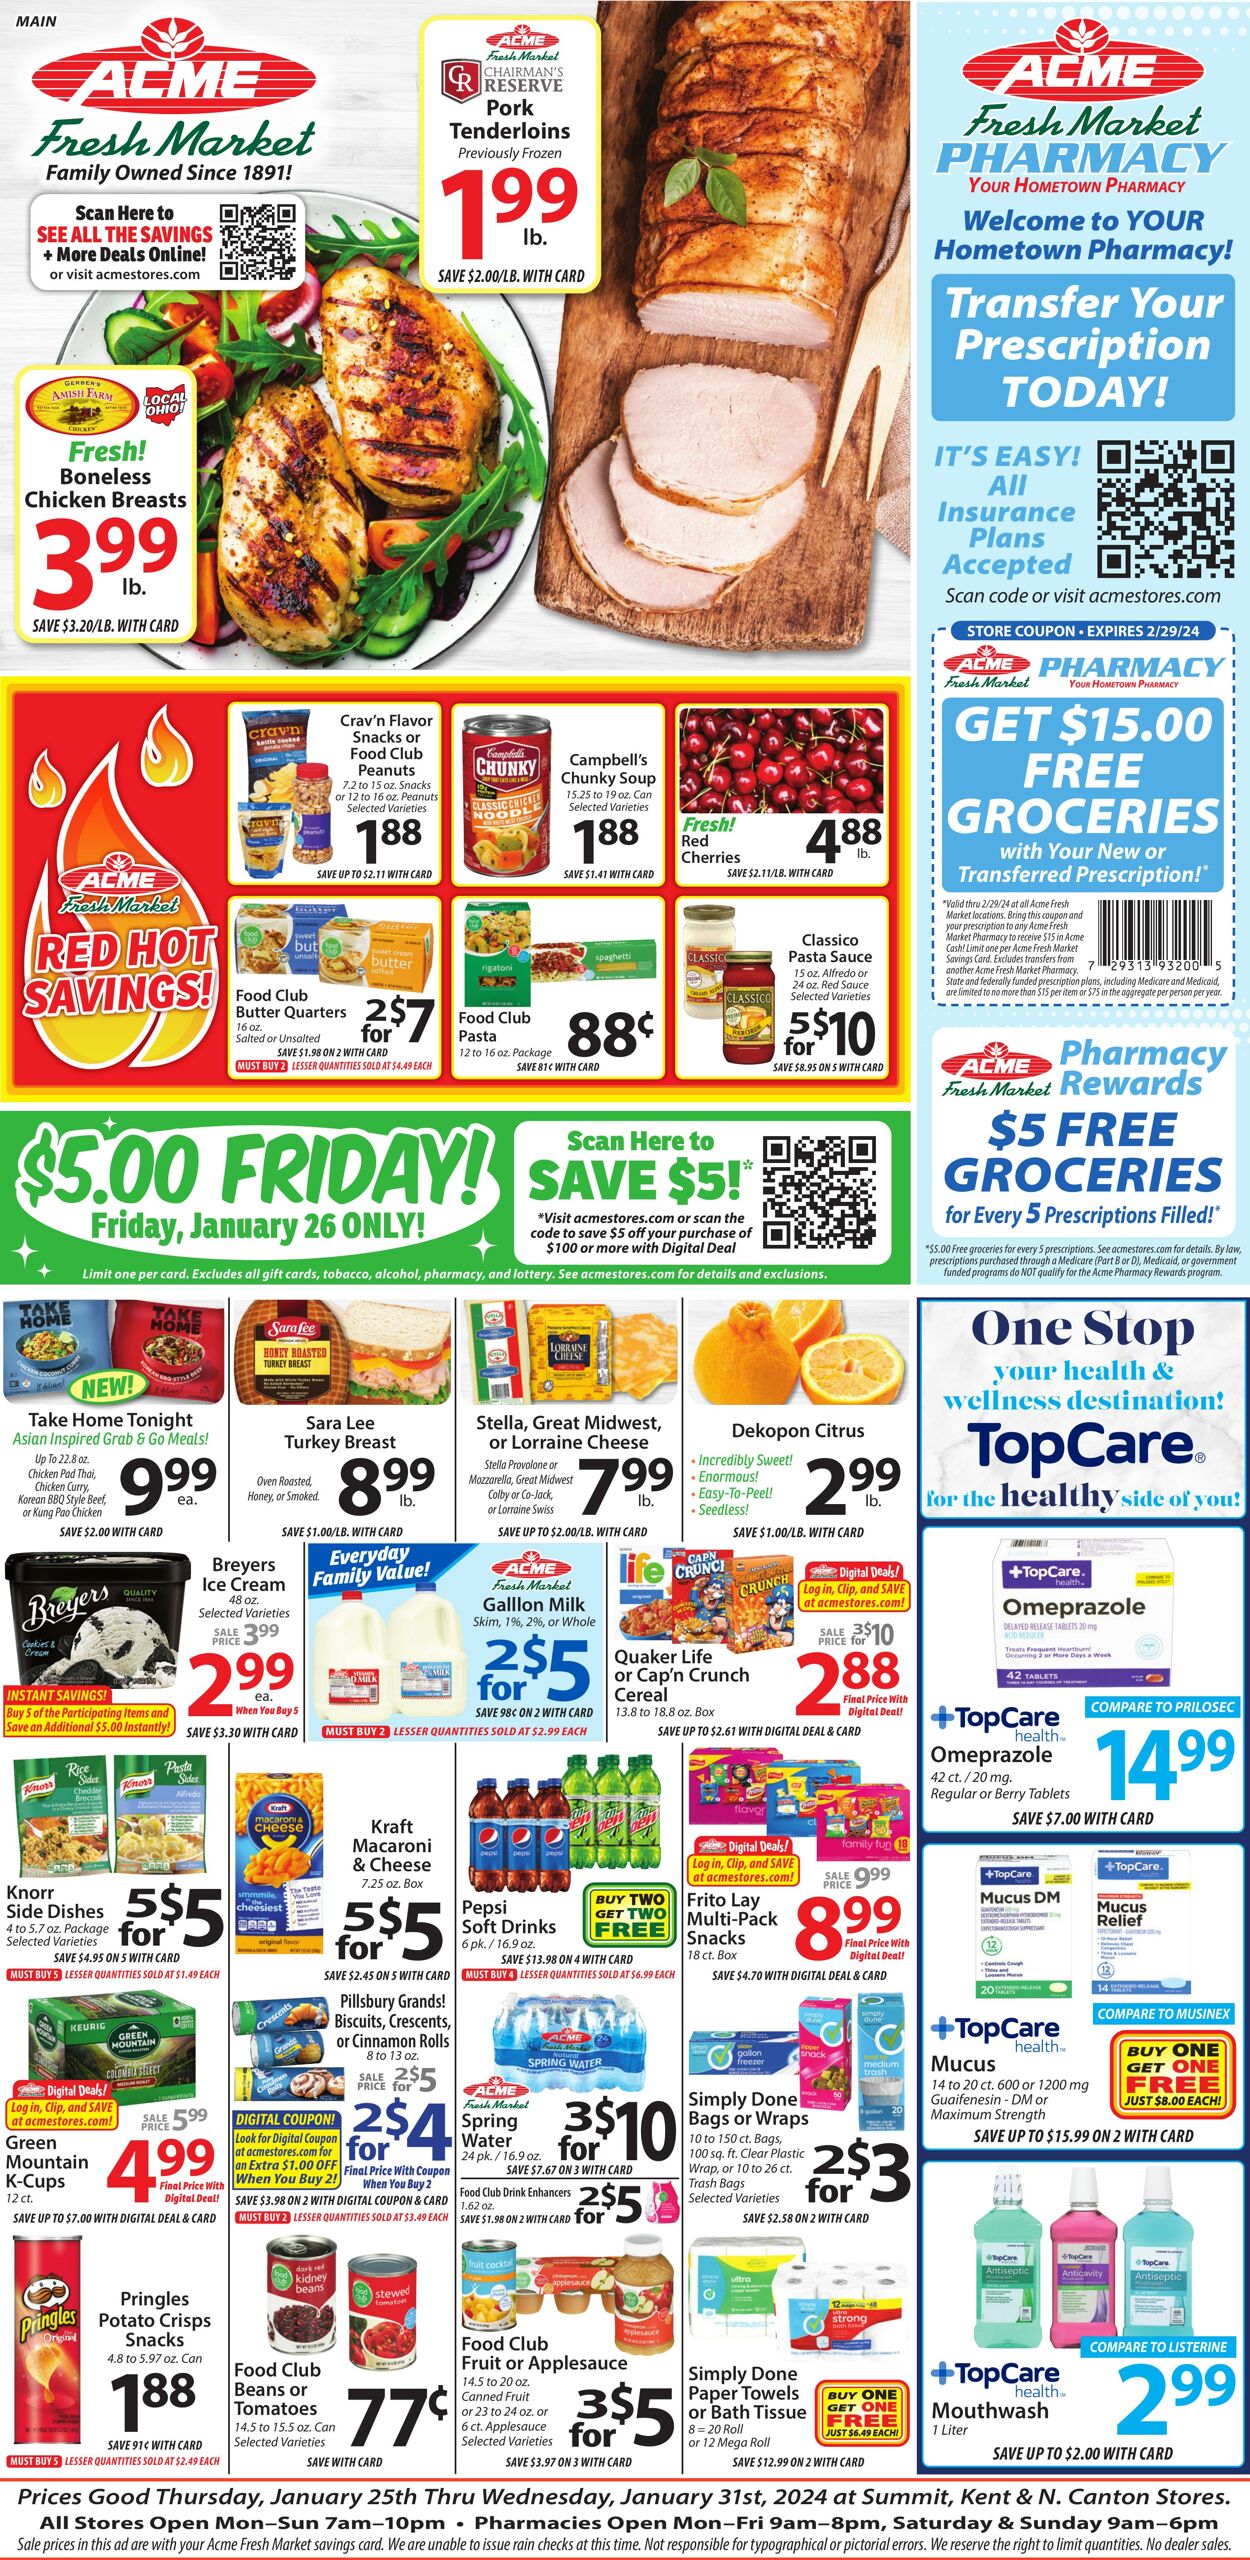 Weekly ad ACME Fresh Market 01/25/2024 - 01/31/2024